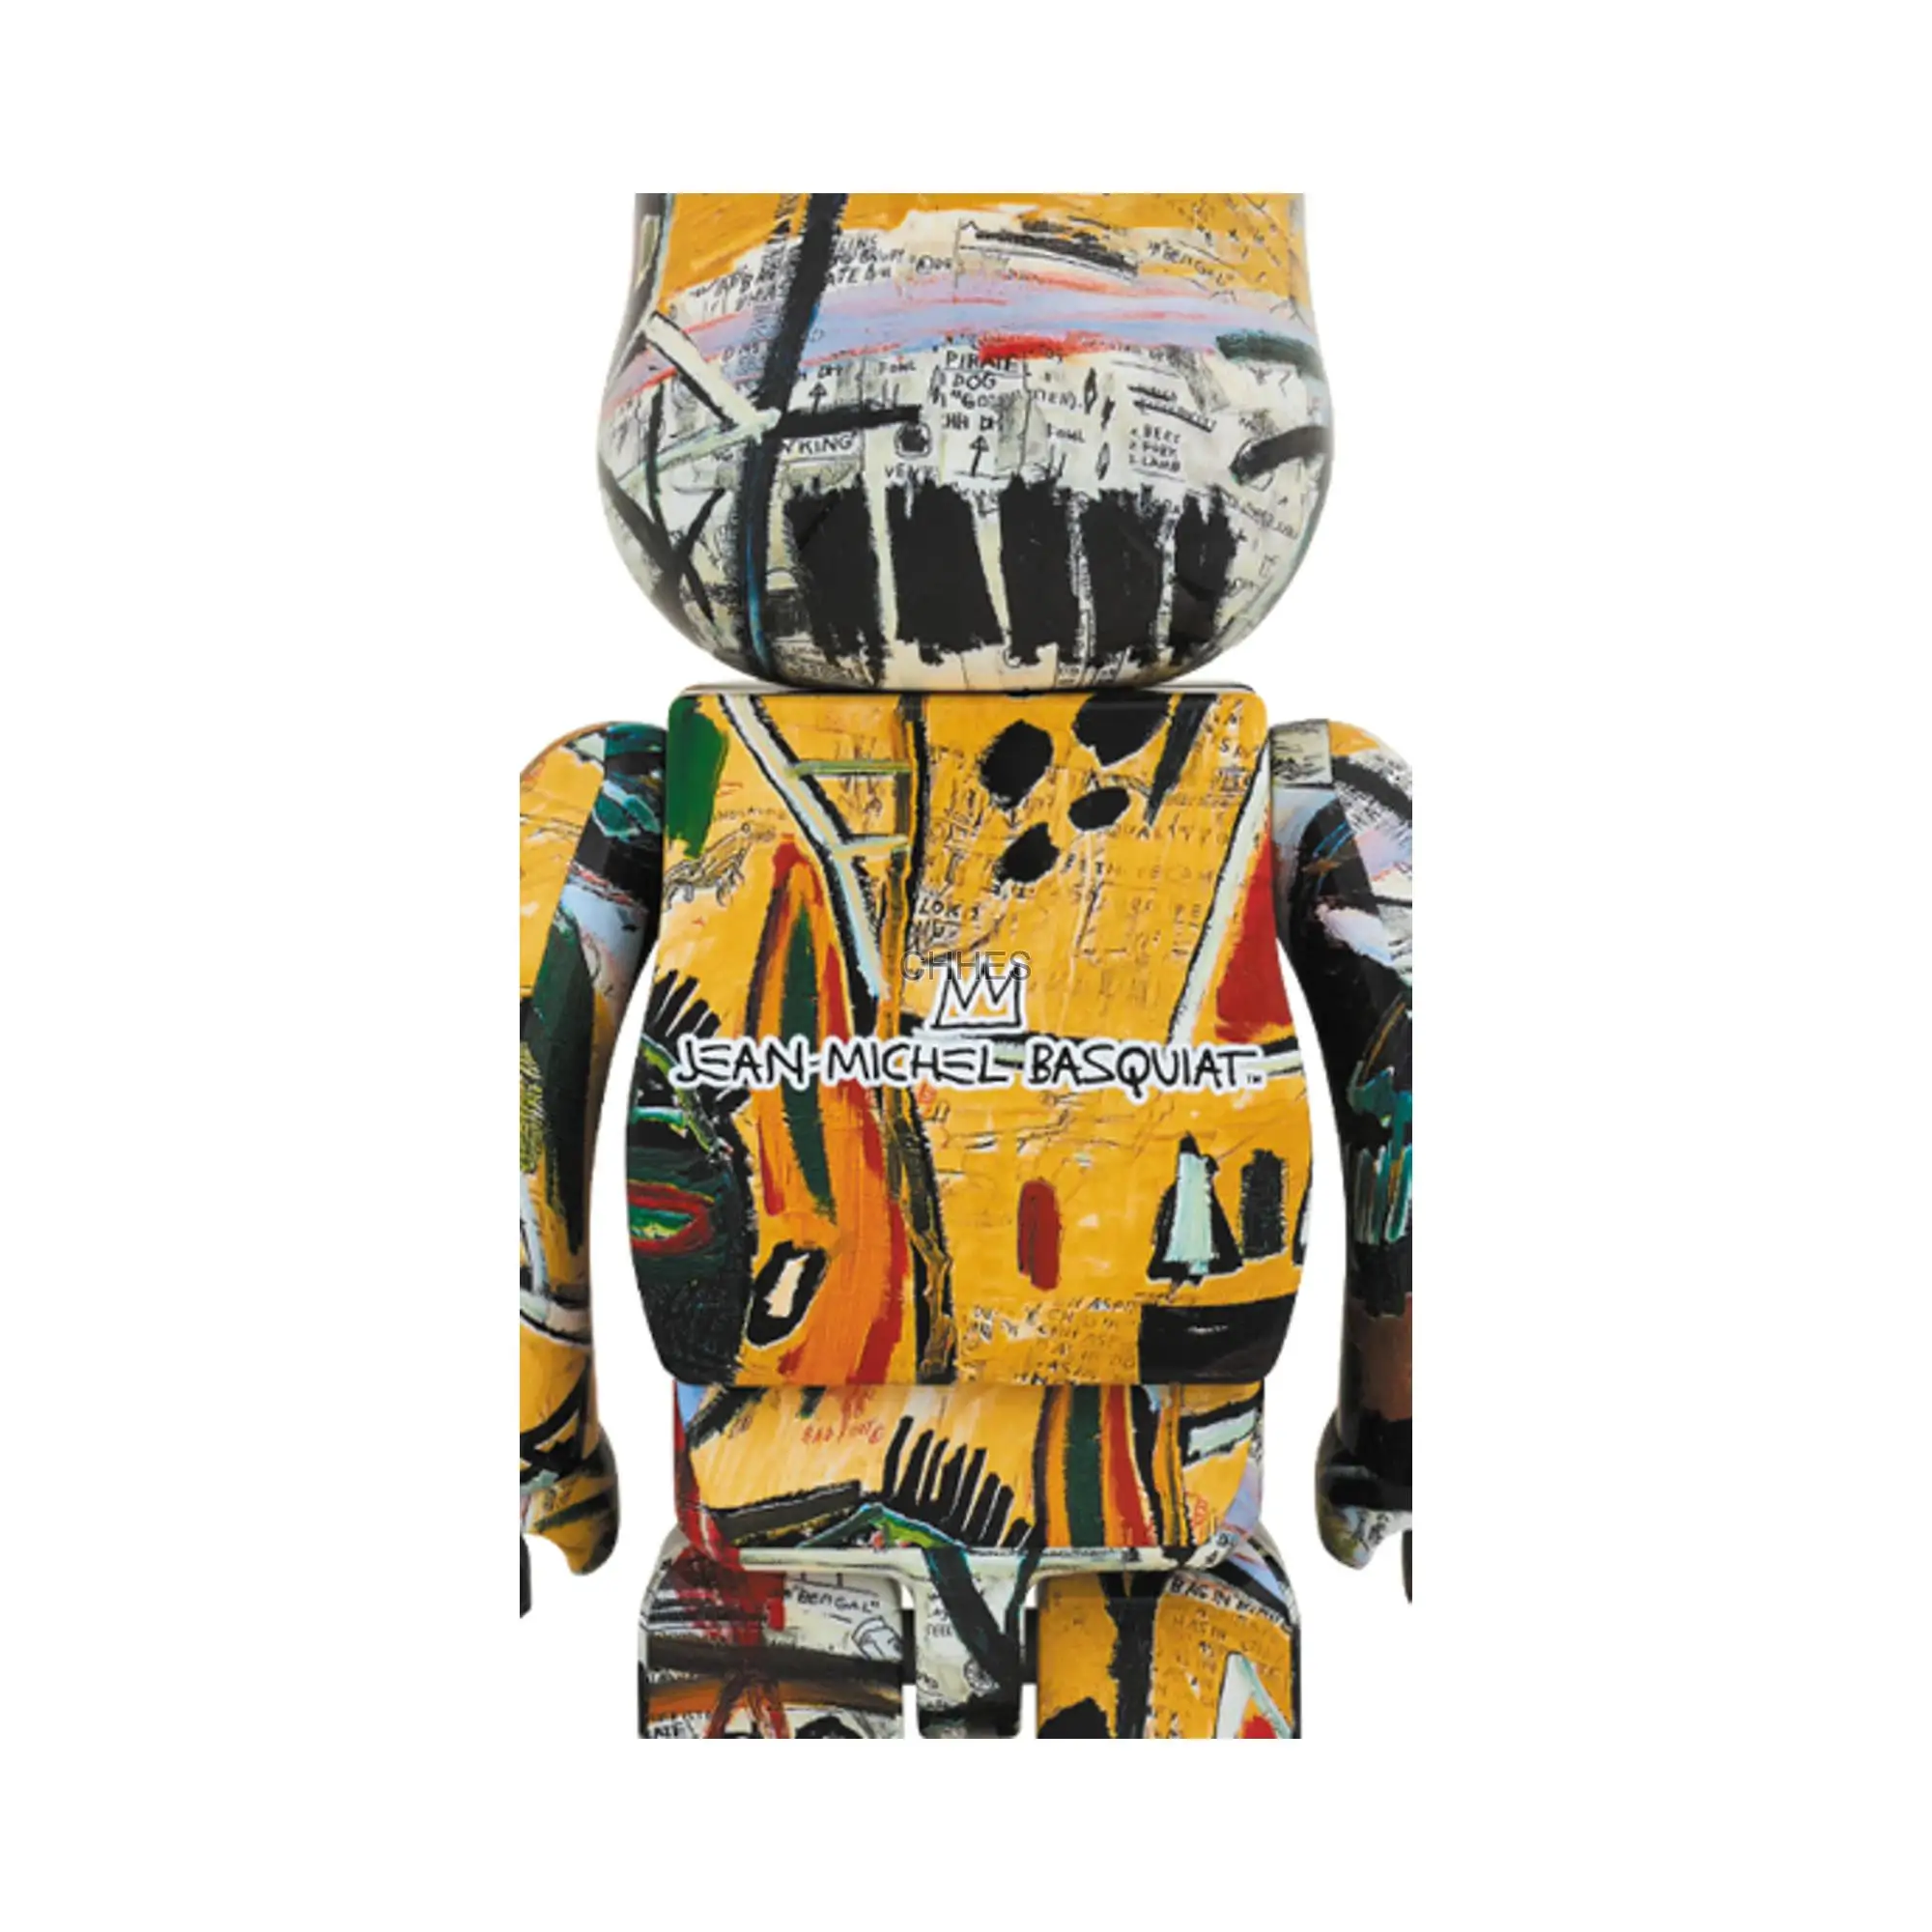 Bearbrick x Jean-Michel Basquiat 1000%